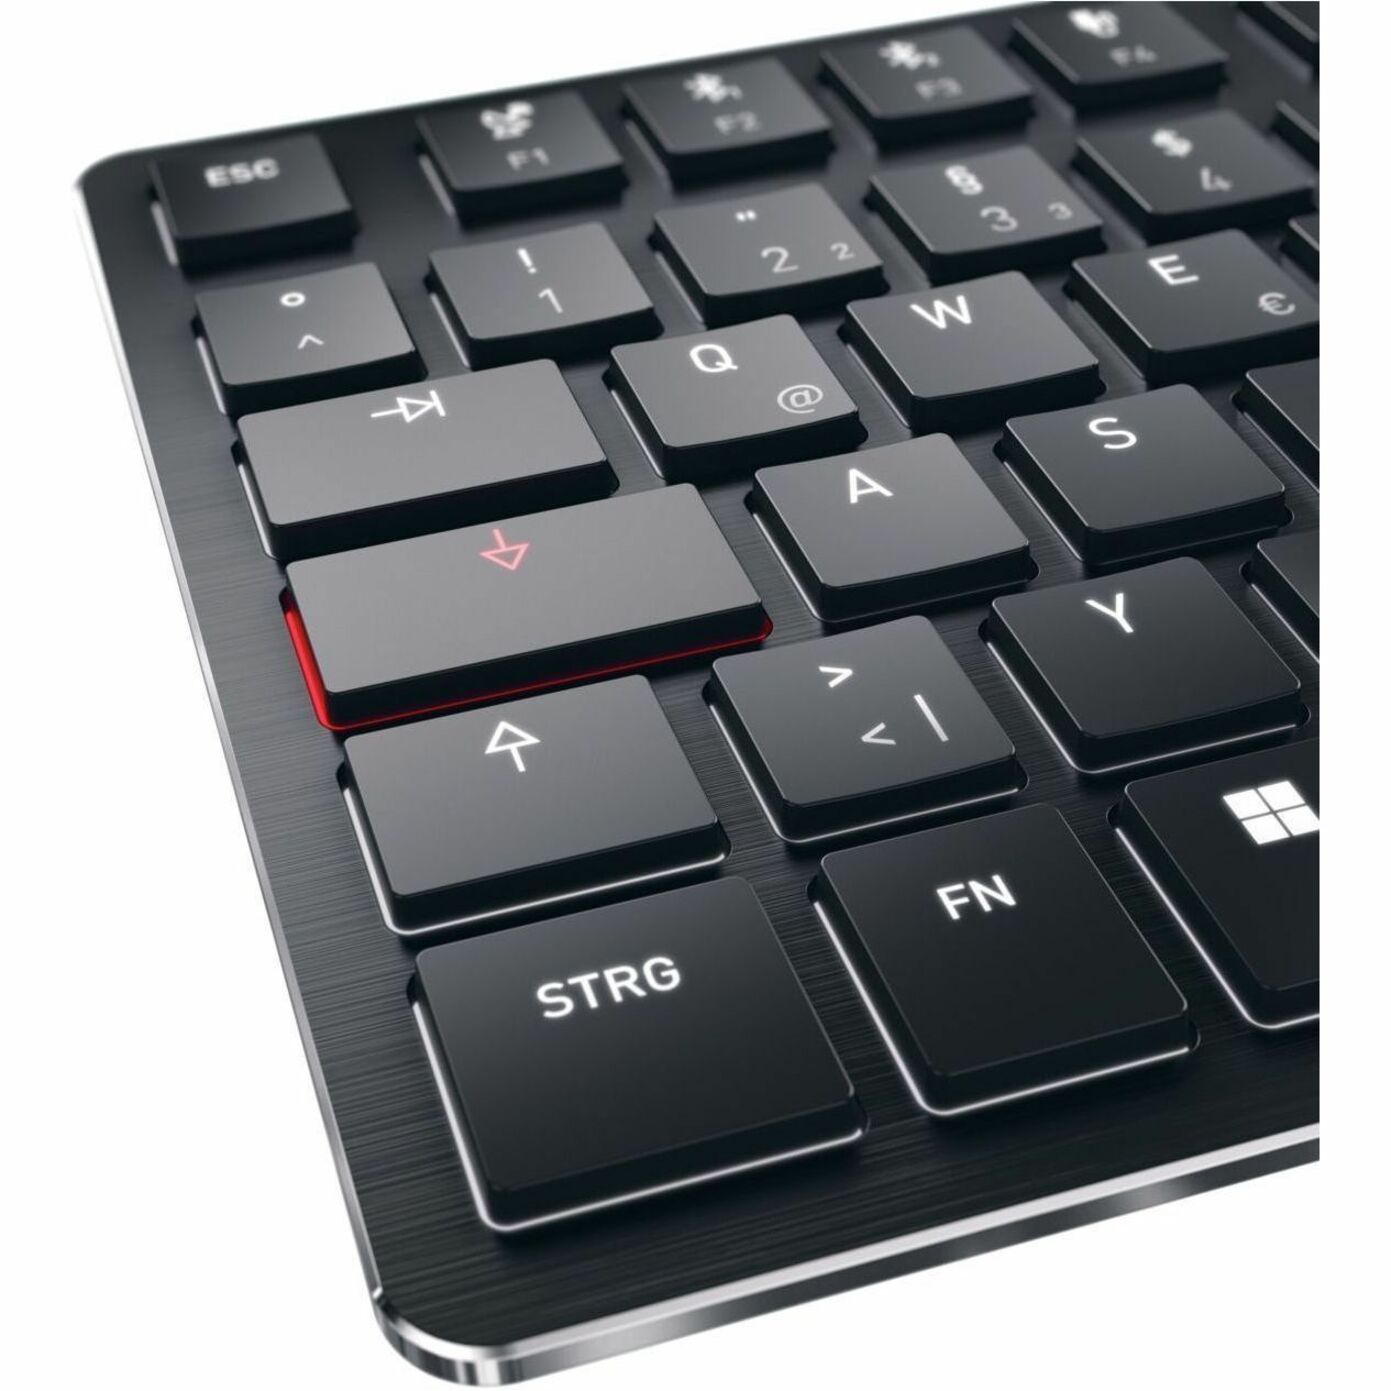 CHERRY G8U-27000LTBUS-2 KW X ULP Tastatur kabellos Bluetooth/RF RGB LED Hintergrundbeleuchtung wiederaufladbarer Akku 